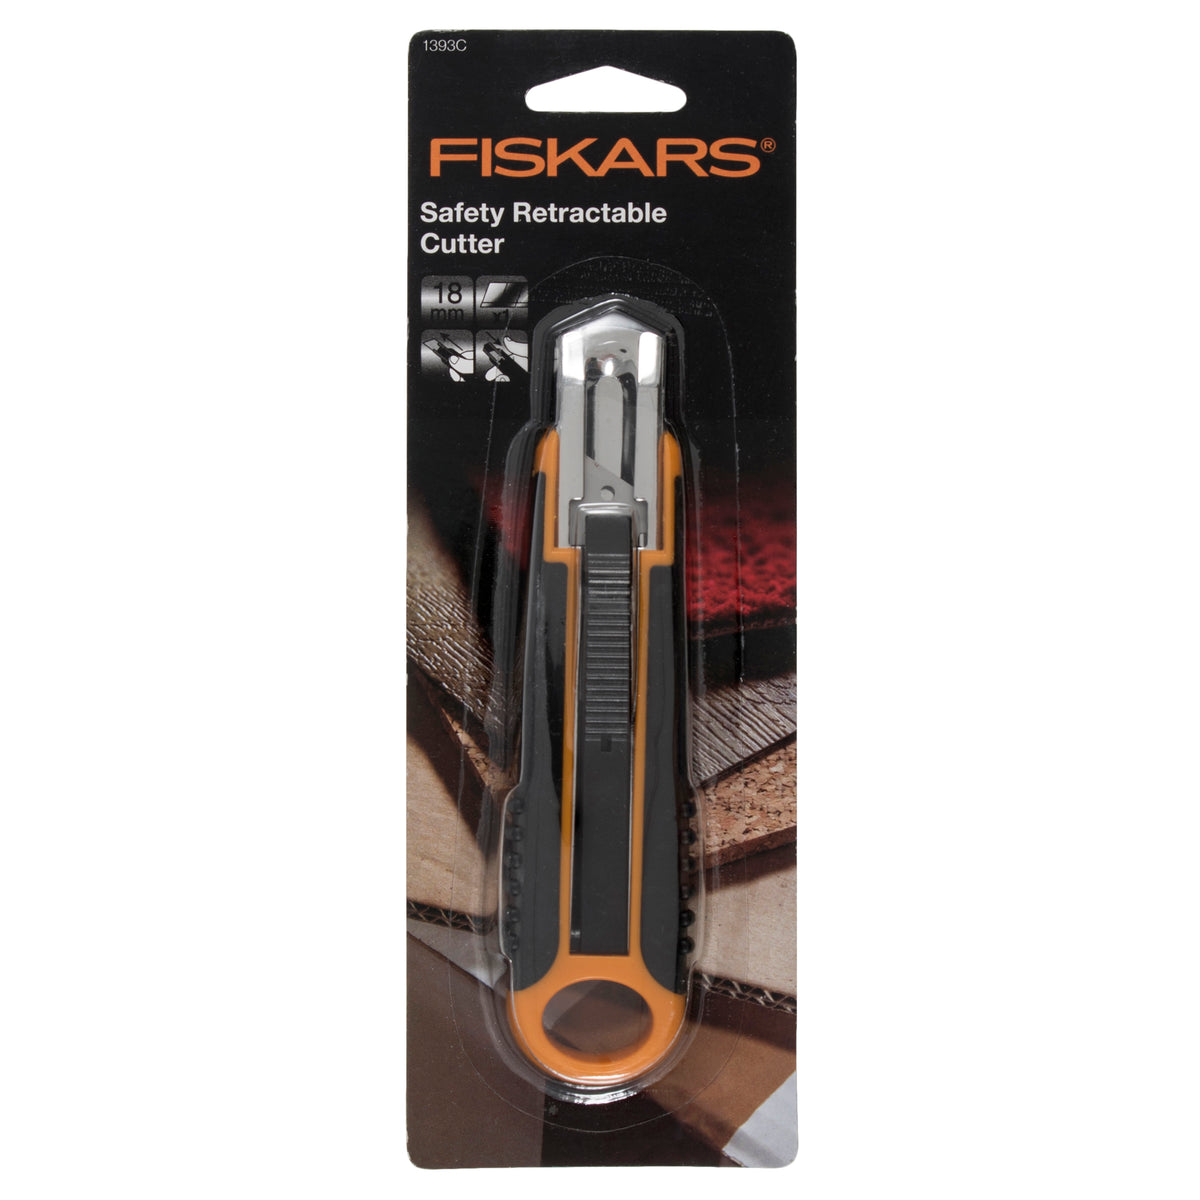 FISKARS Safety Retractable Cutter: 18mm